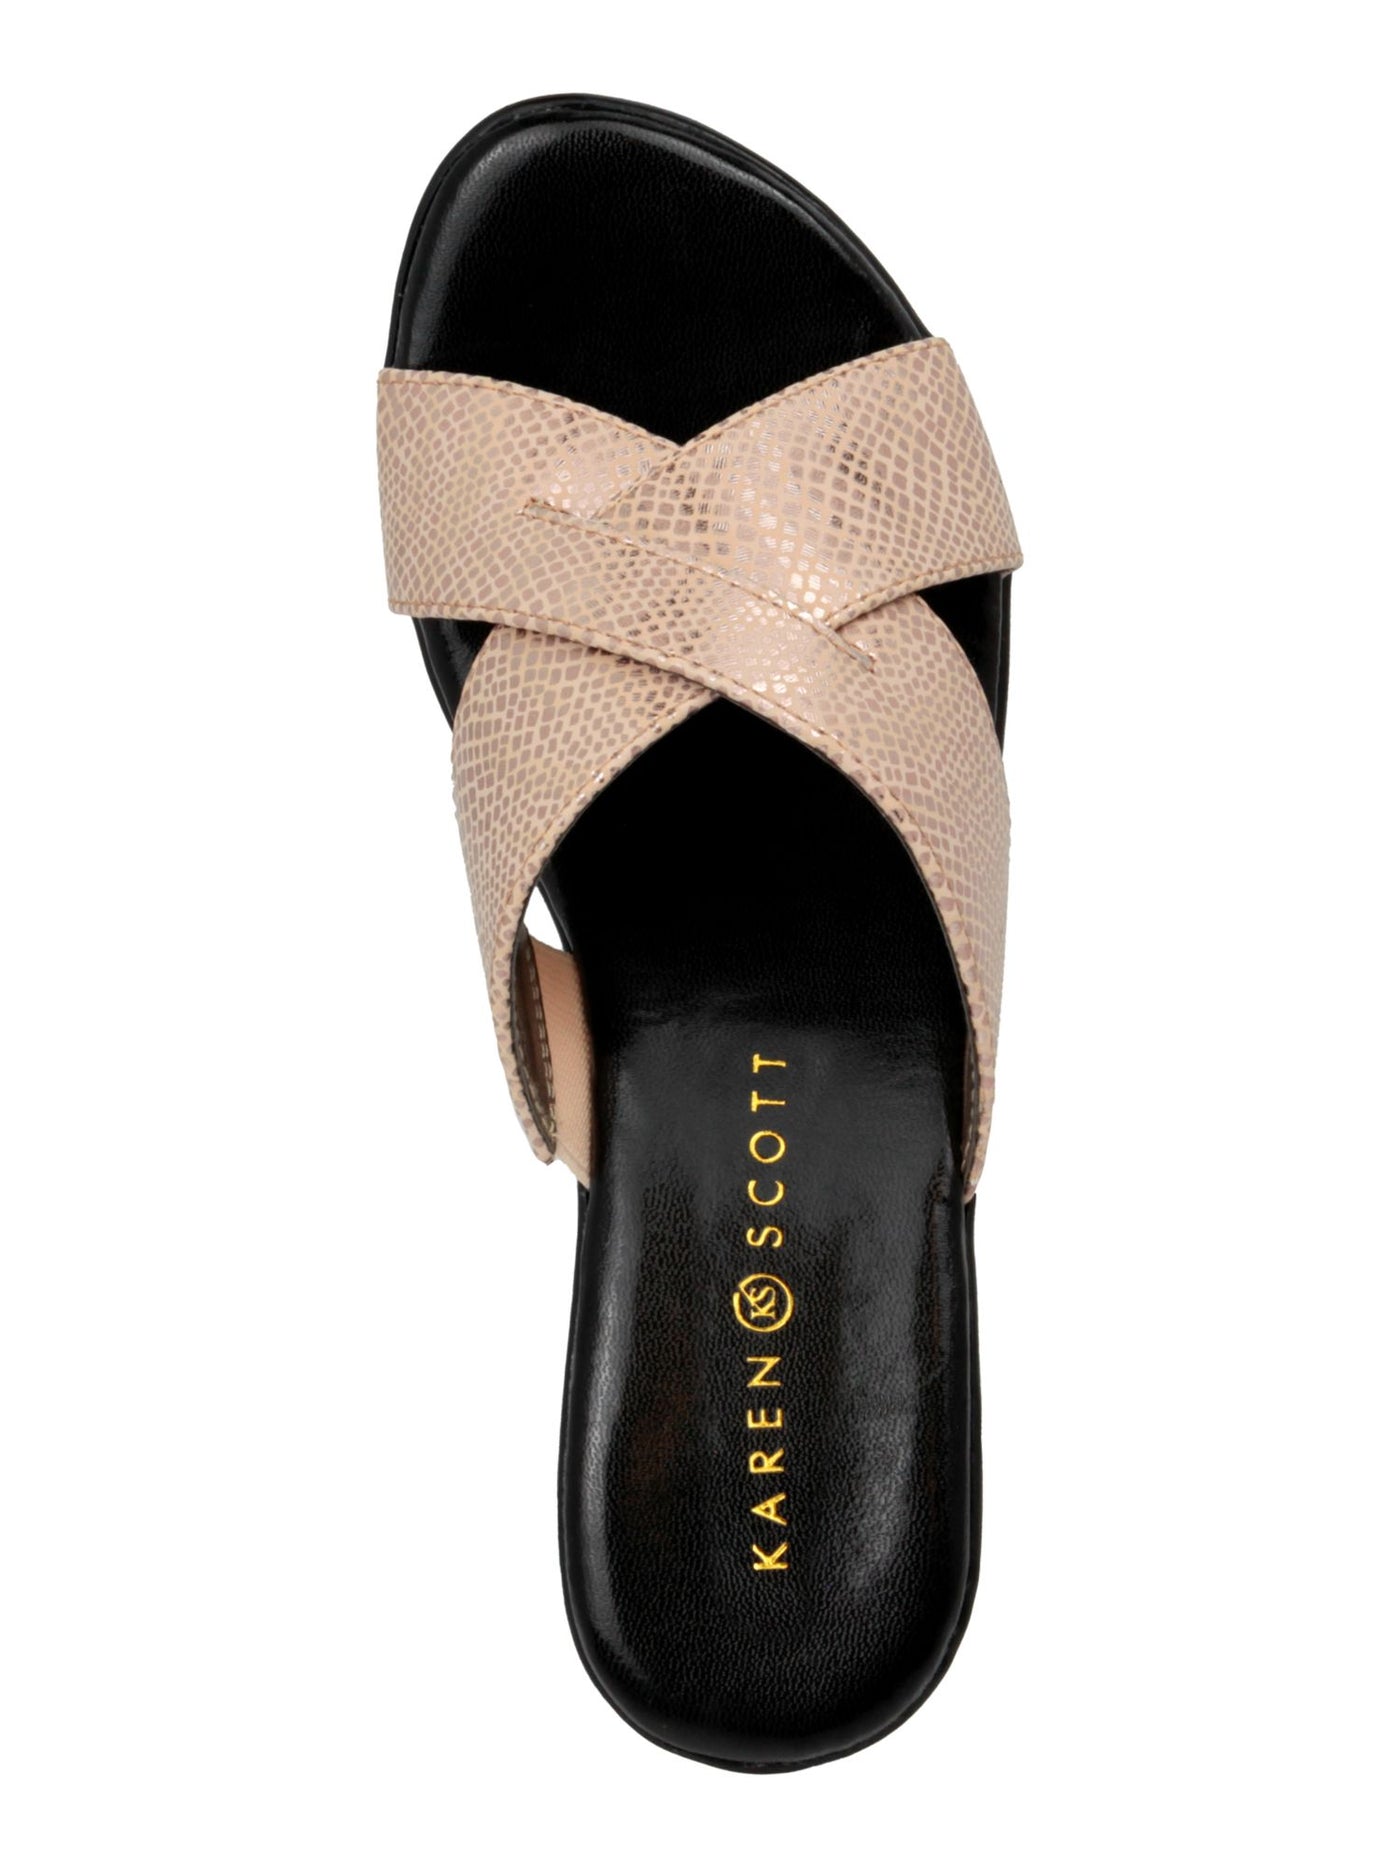 KAREN SCOTT Womens Pink Crisscross Straps Comfort Petraa Almond Toe Wedge Slip On Slide Sandals Shoes 5 M